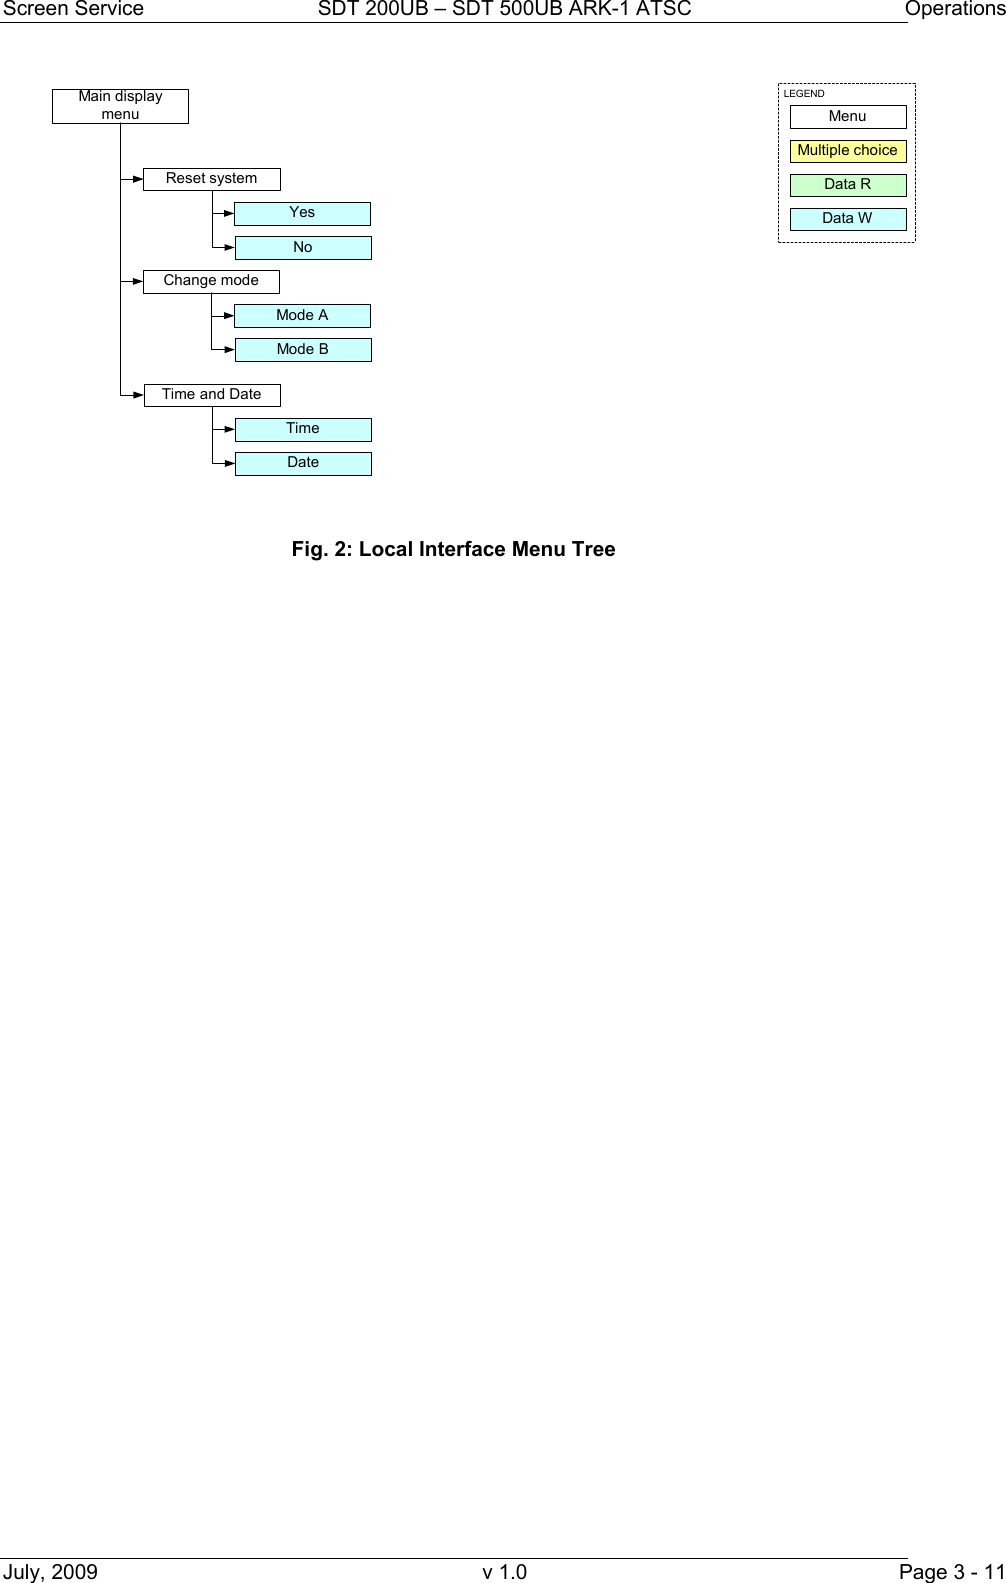 Screen Service  SDT 200UB – SDT 500UB ARK-1 ATSC  Operations July, 2009  v 1.0  Page 3 - 11 Reset systemChange modeMode AMode BYesNoTime and DateTimeDateMain displaymenu MenuMultiple choiceData RLEGENDData W  Fig. 2: Local Interface Menu Tree                                         